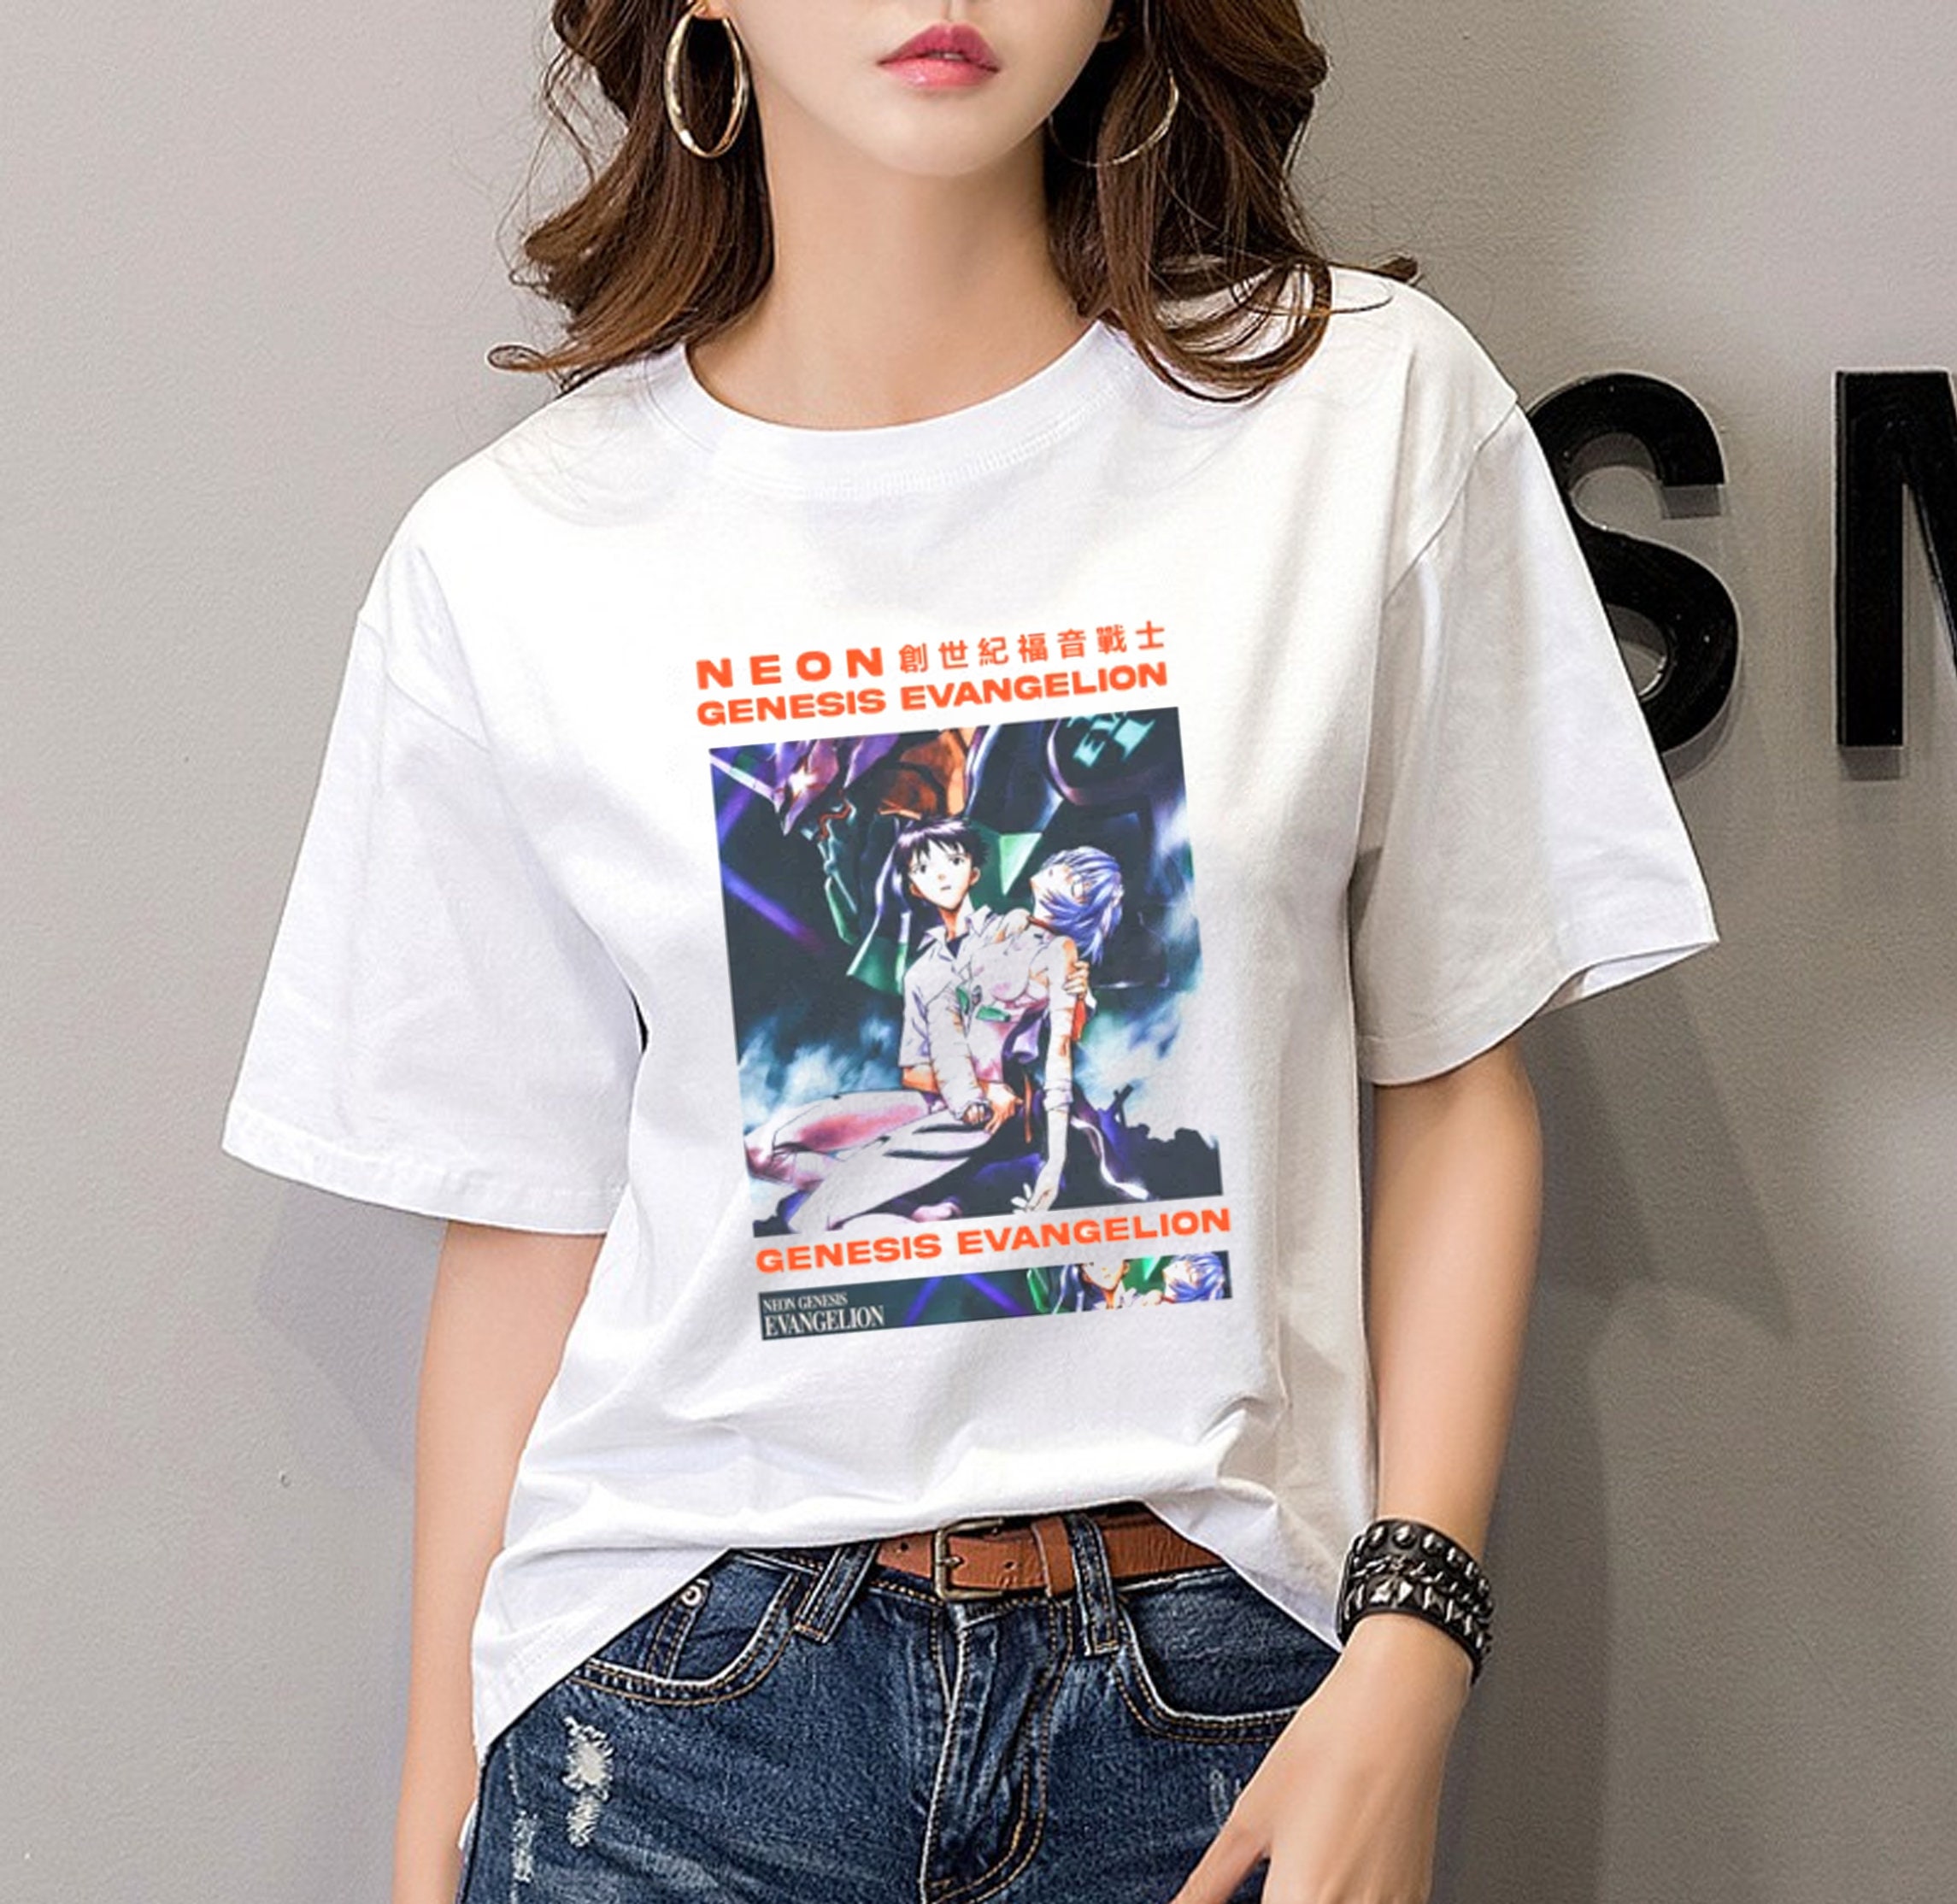 Rei Ayanami X Shinji Ikari Vintage Neon Unisex T-Shirt